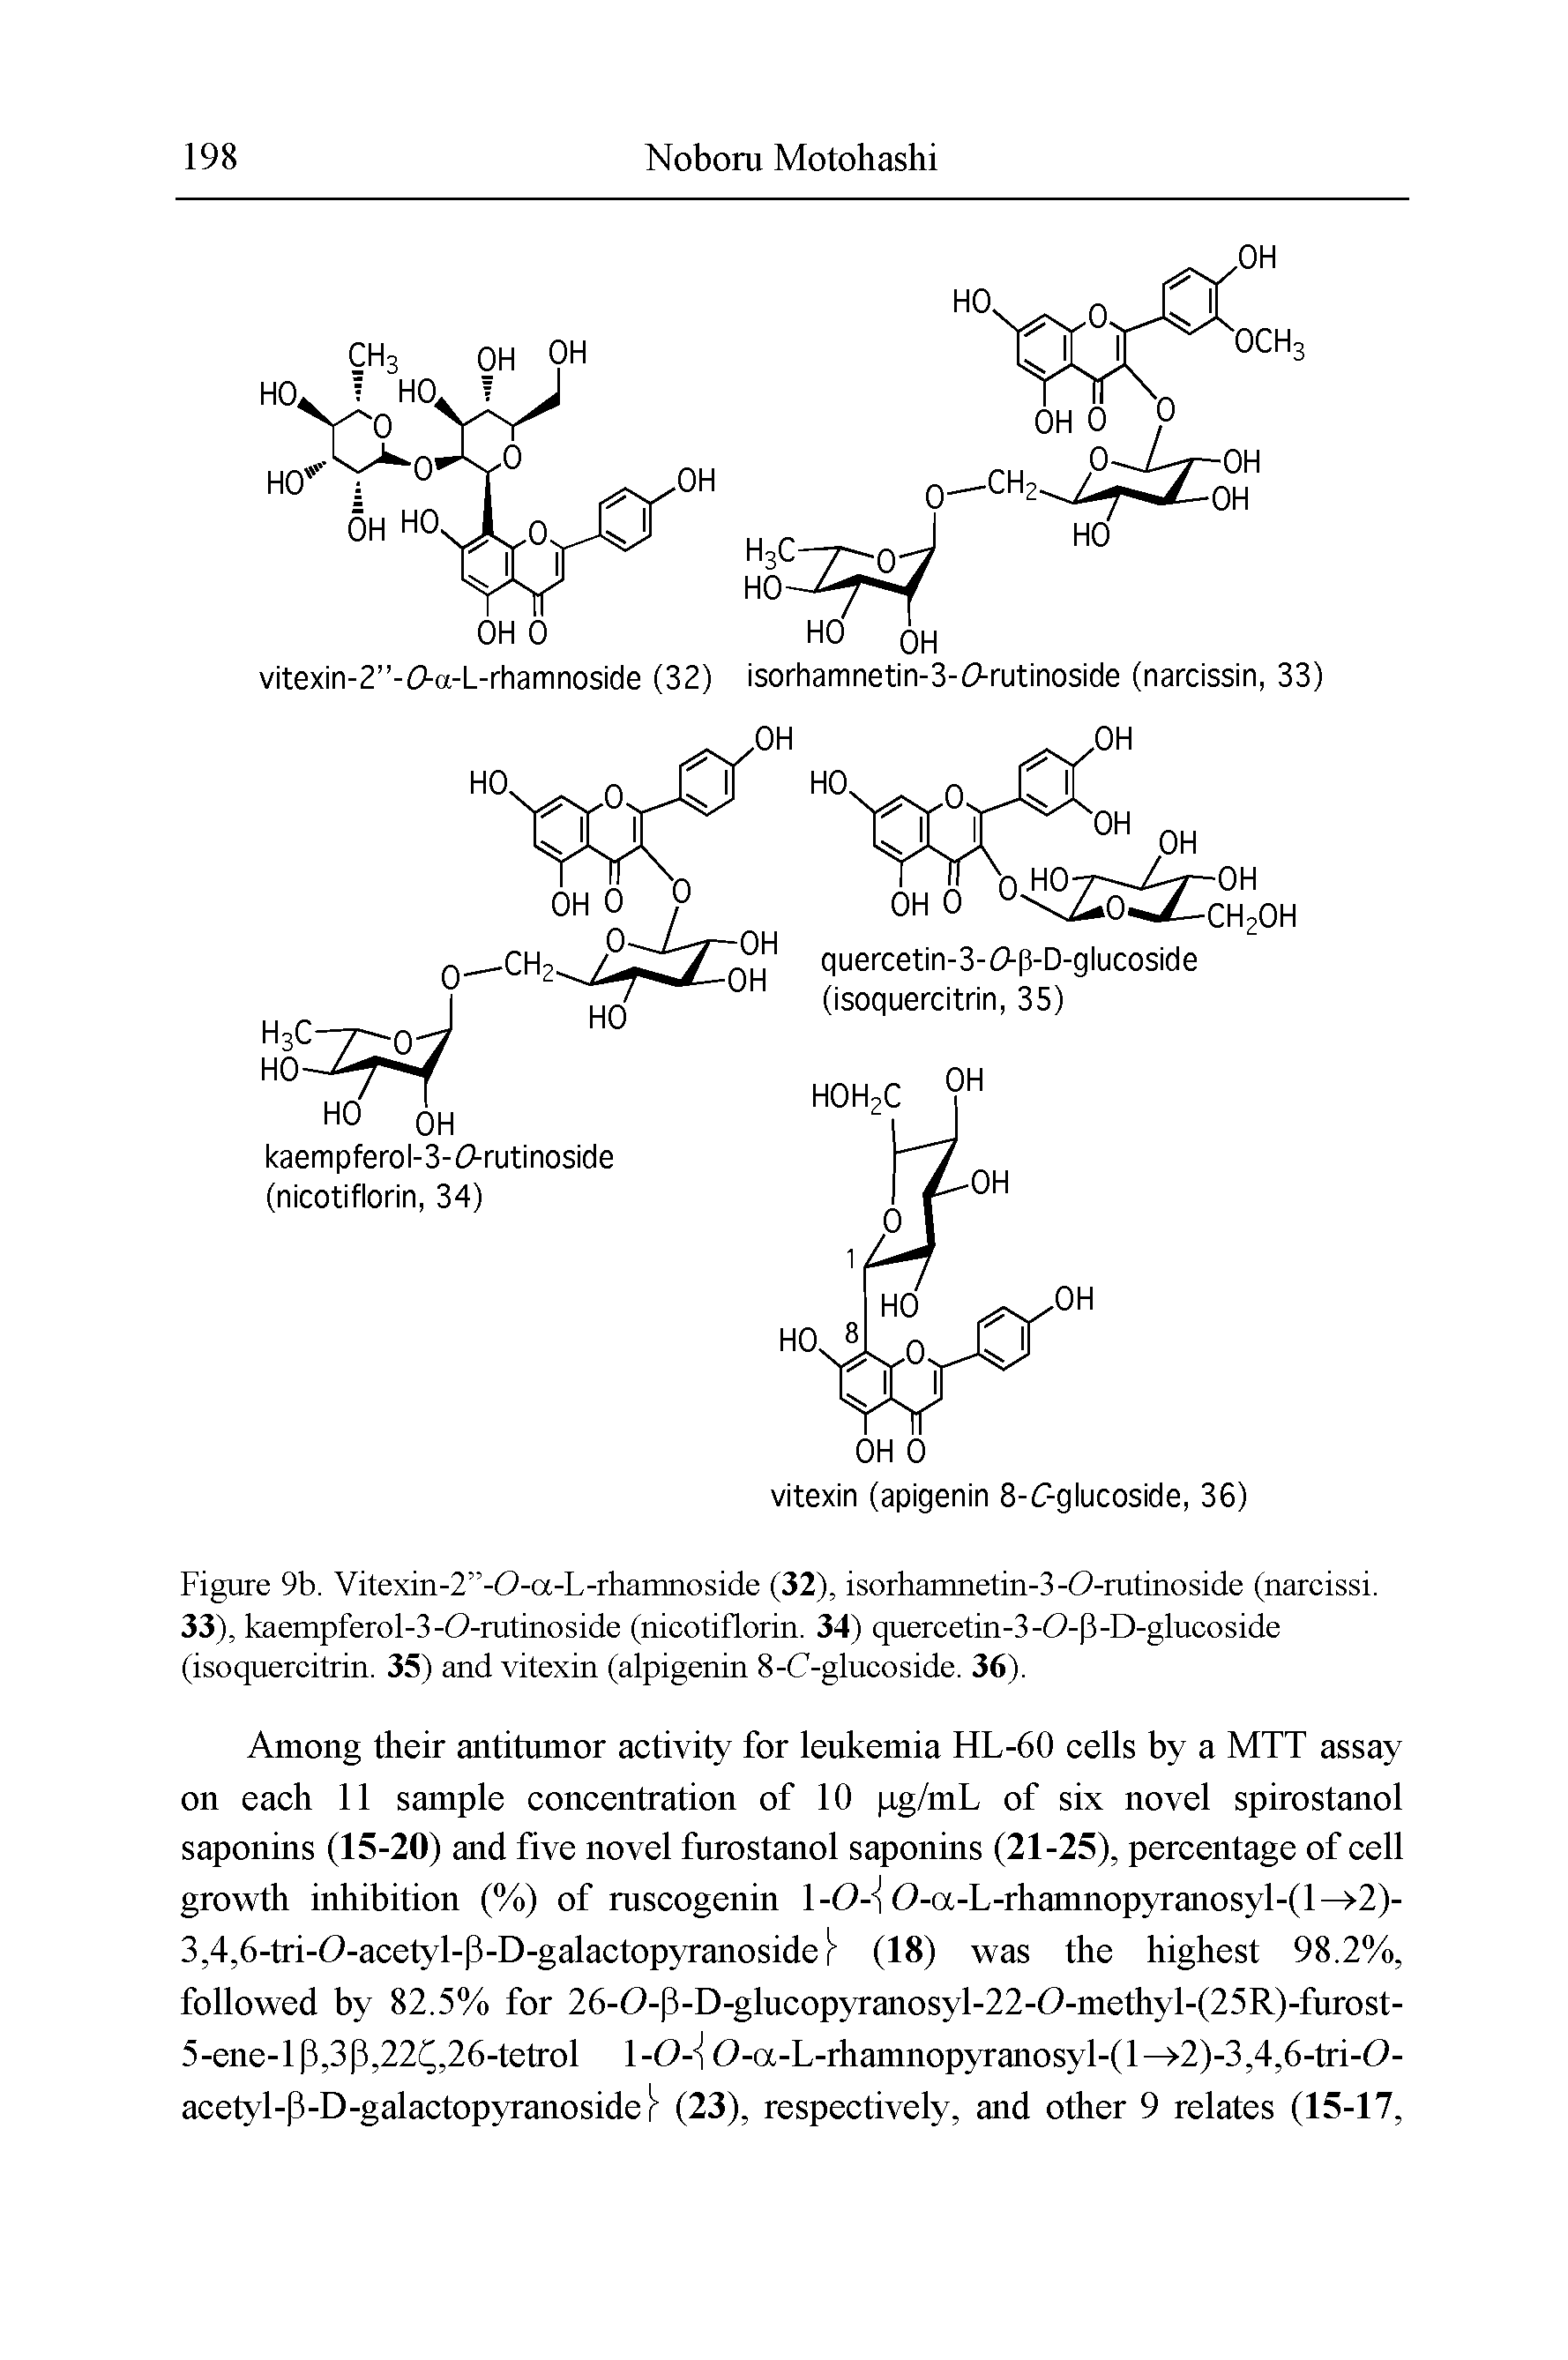 Figure 9b. Vitexin-2 -0-a-L-rhamnoside (32), isorhamnetin-3-O-rutinoside (narcissi. 33), kaempferol-3-O-mtinoside (nicotiflorin. 34) quercetin-3-O-P-D-glucoside (isoquercitrin. 35) and vitexin (alpigenin 8-C-glucoside. 36).